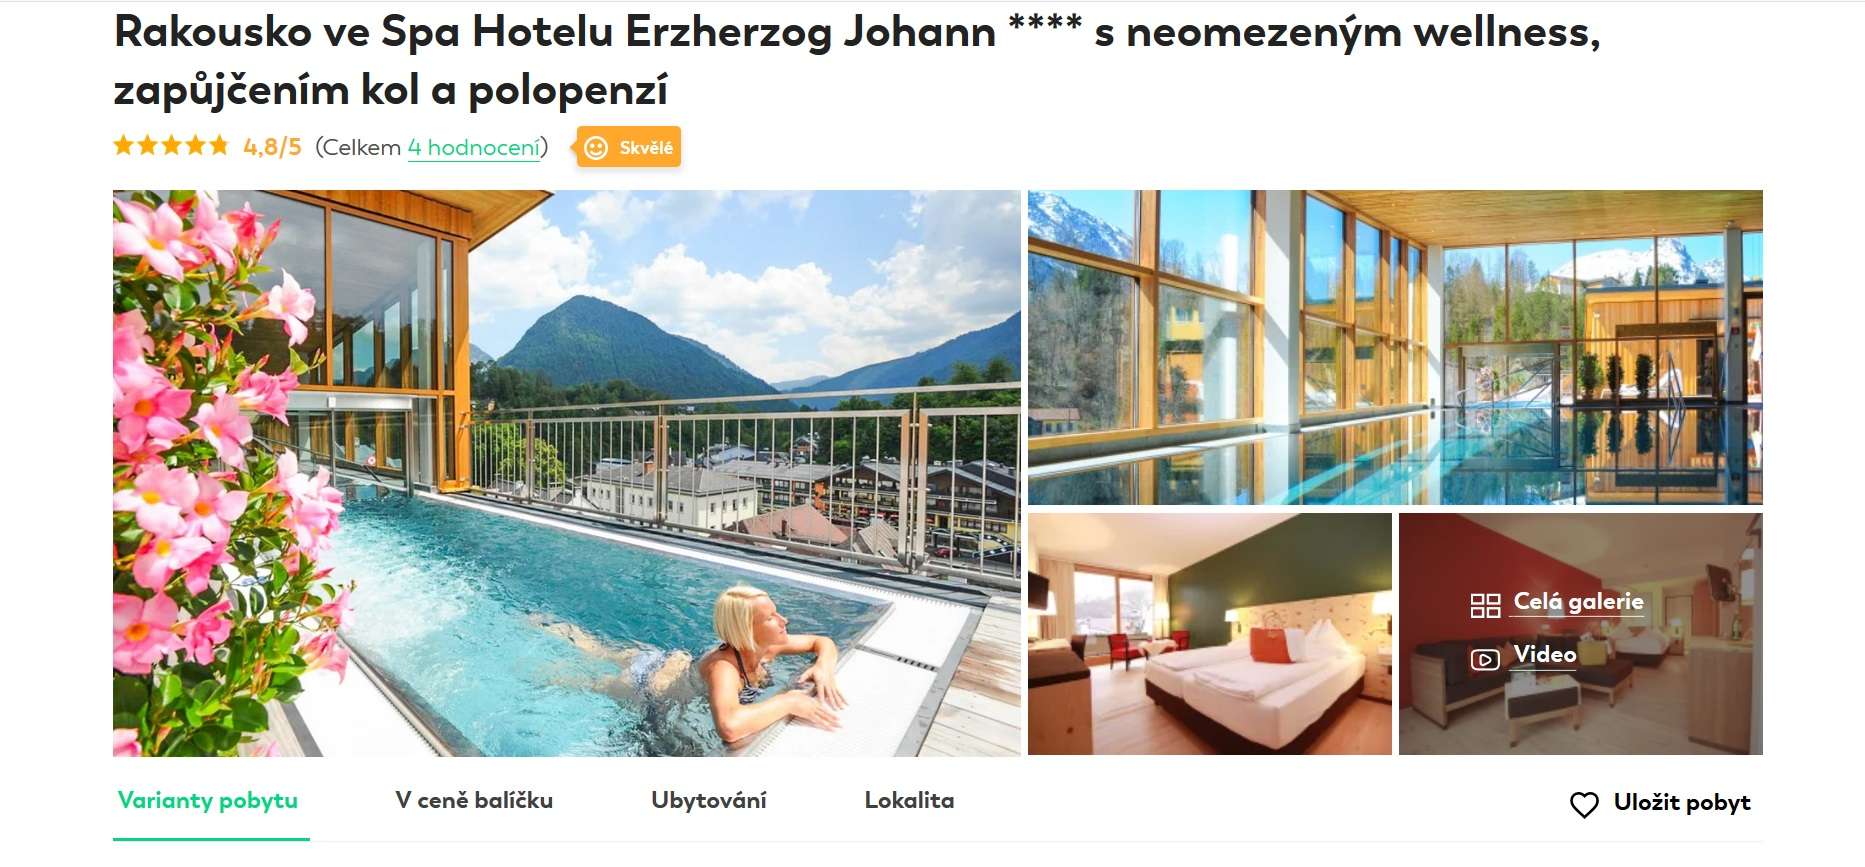 dovolená v rakousku, spa hotel